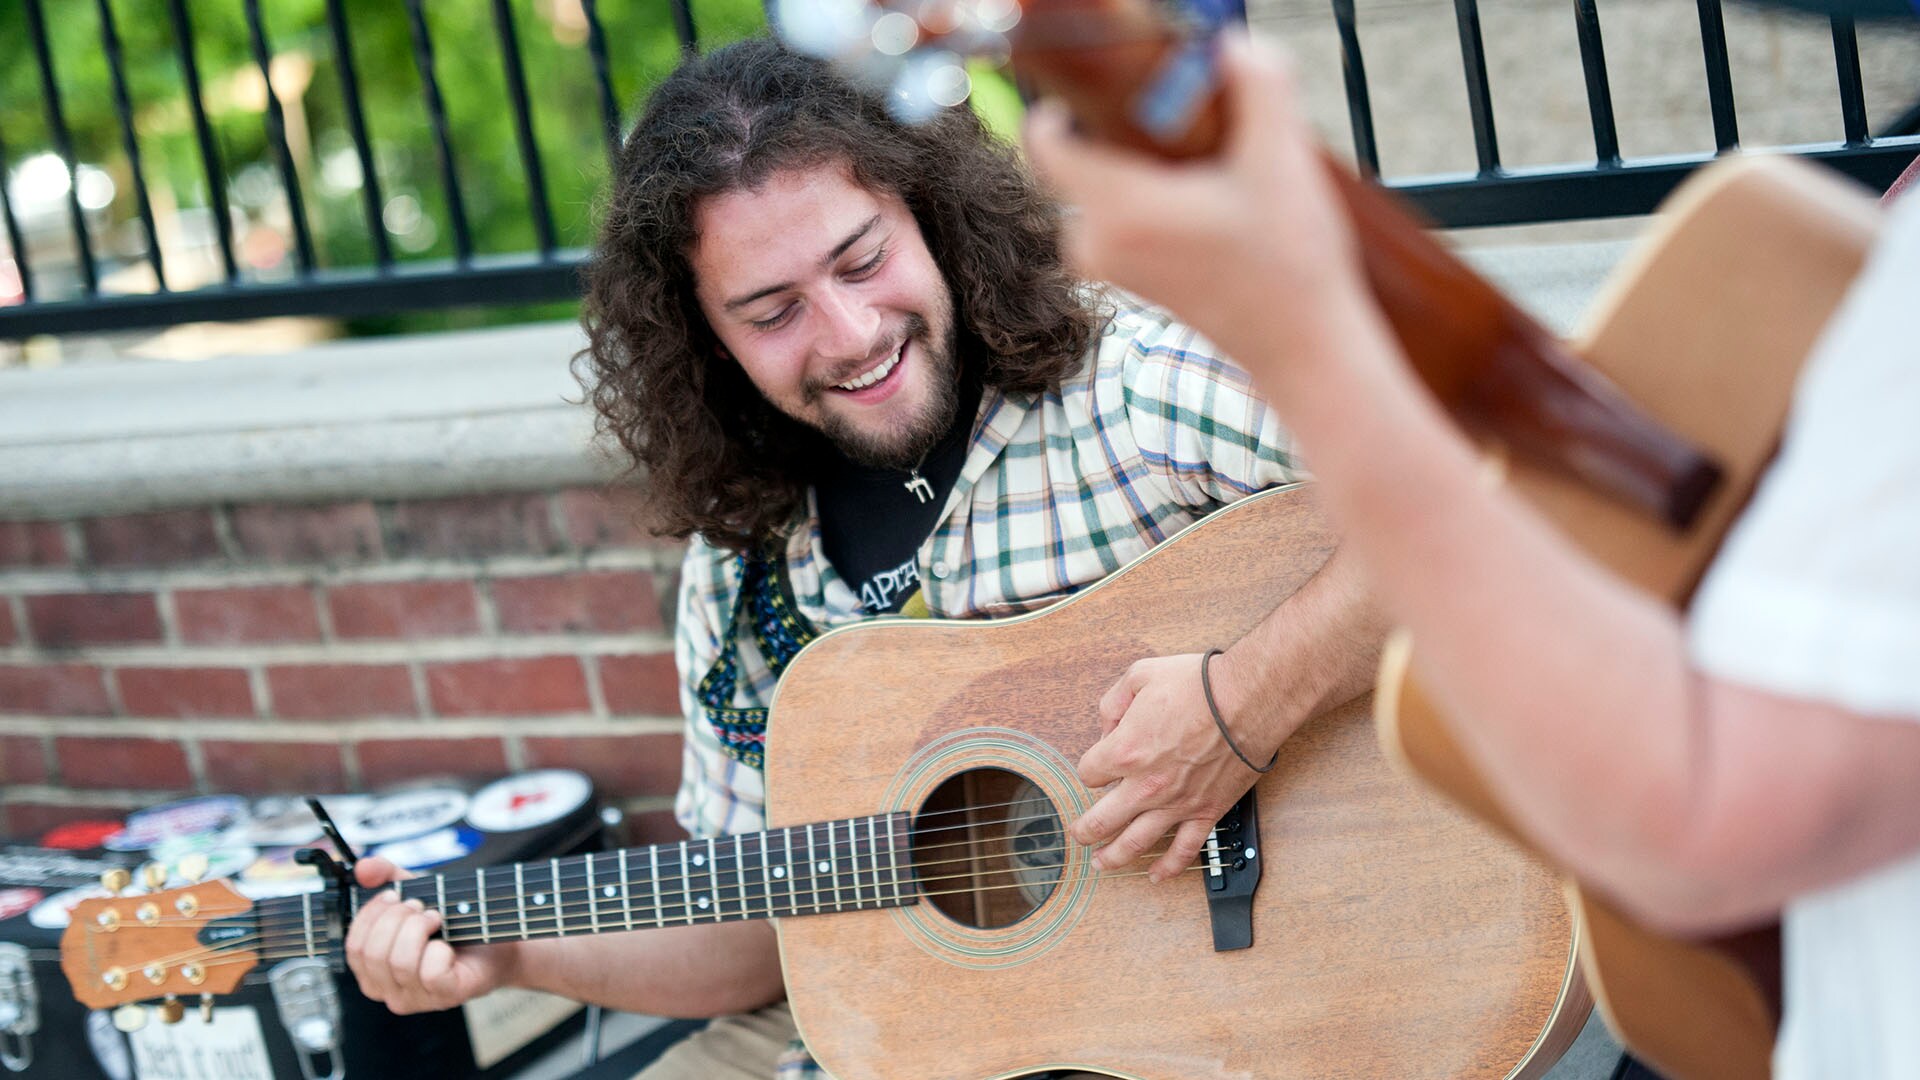 Jake Retting plays guitar along Locust Street in picturesque Floyd, Virginia.